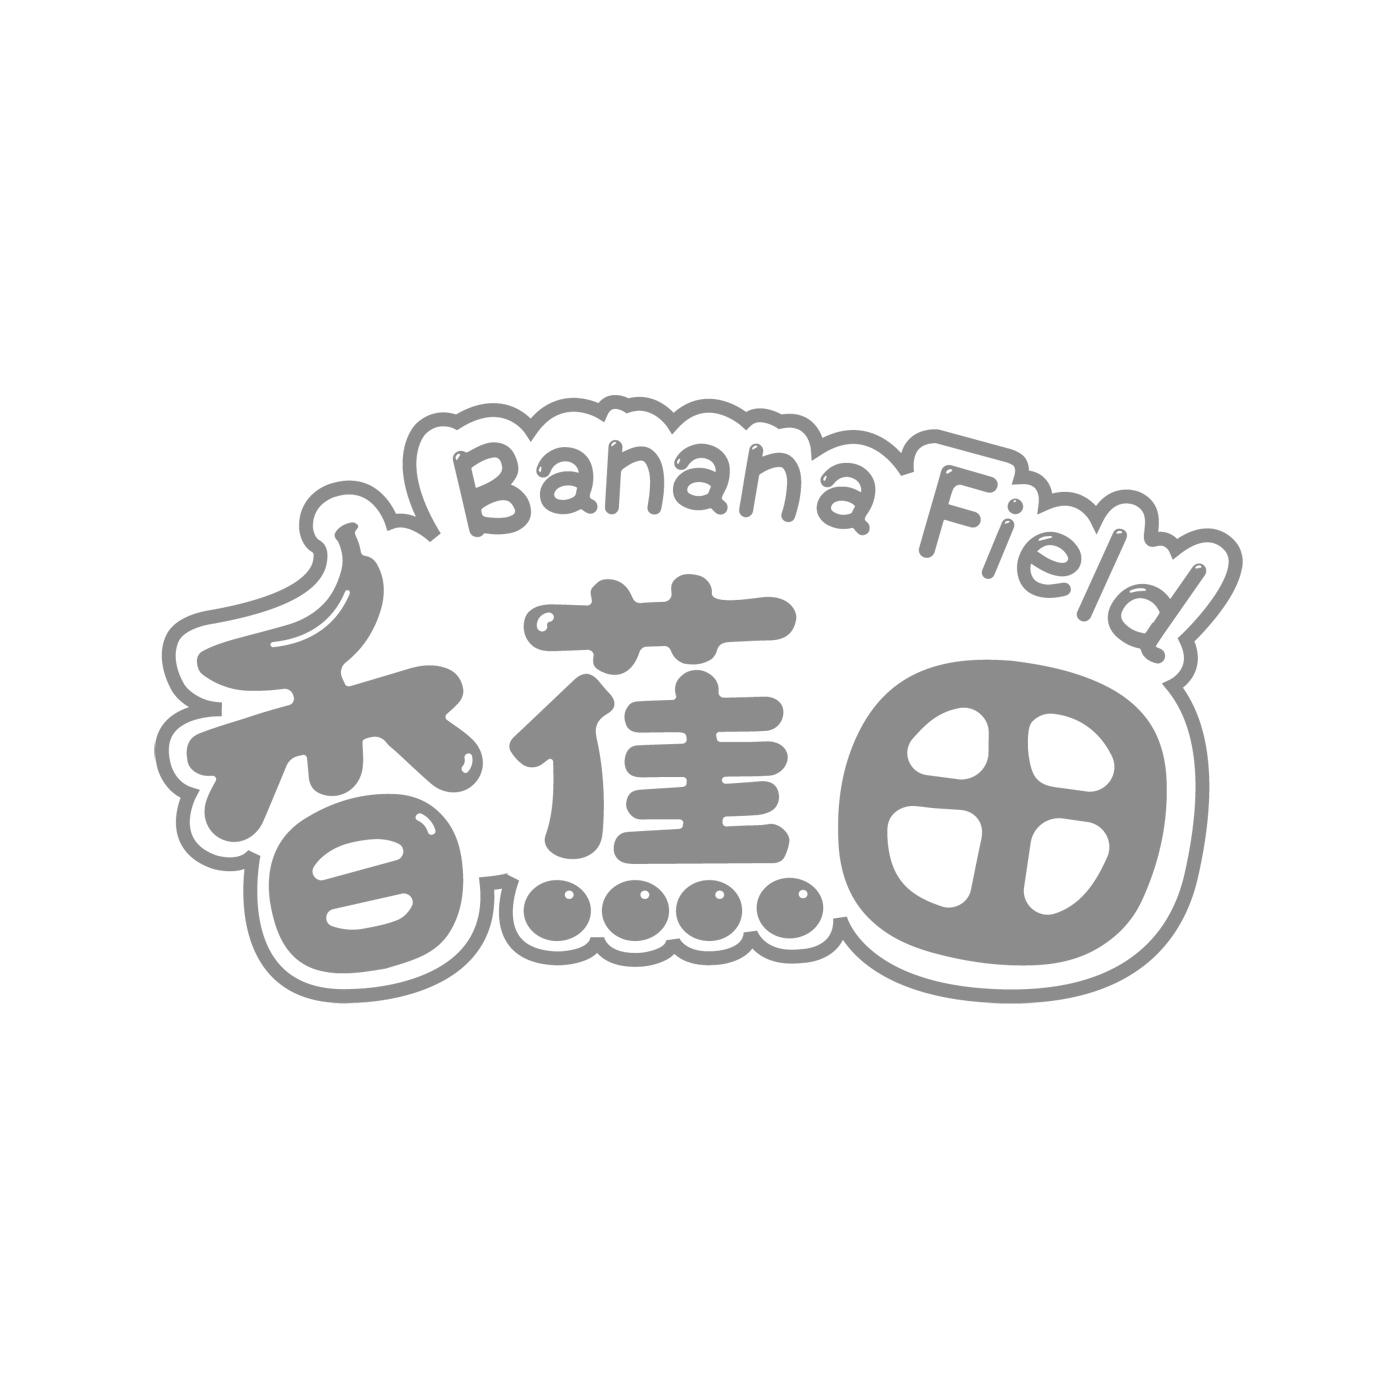 28类-健身玩具香蕉田 BANANA FIELD商标转让